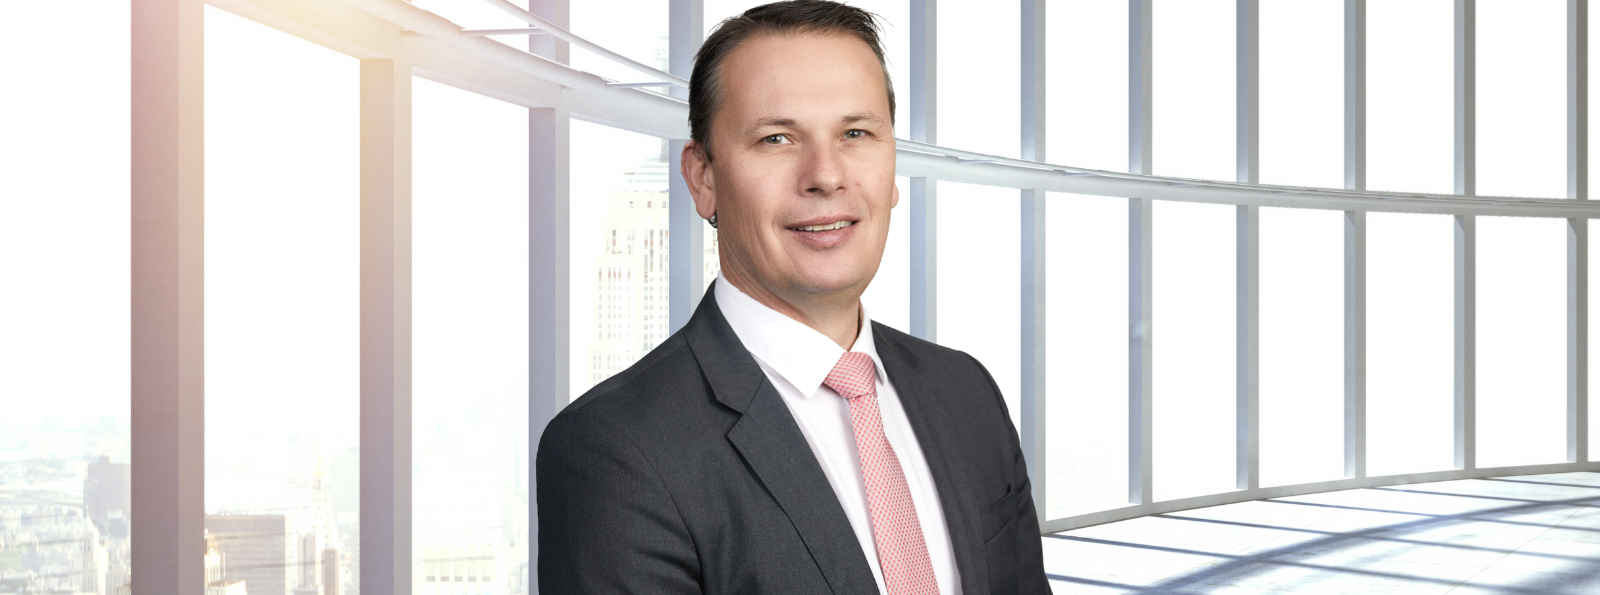 Tony Edwards, CIO and Executive Director for Atrium Investment Management